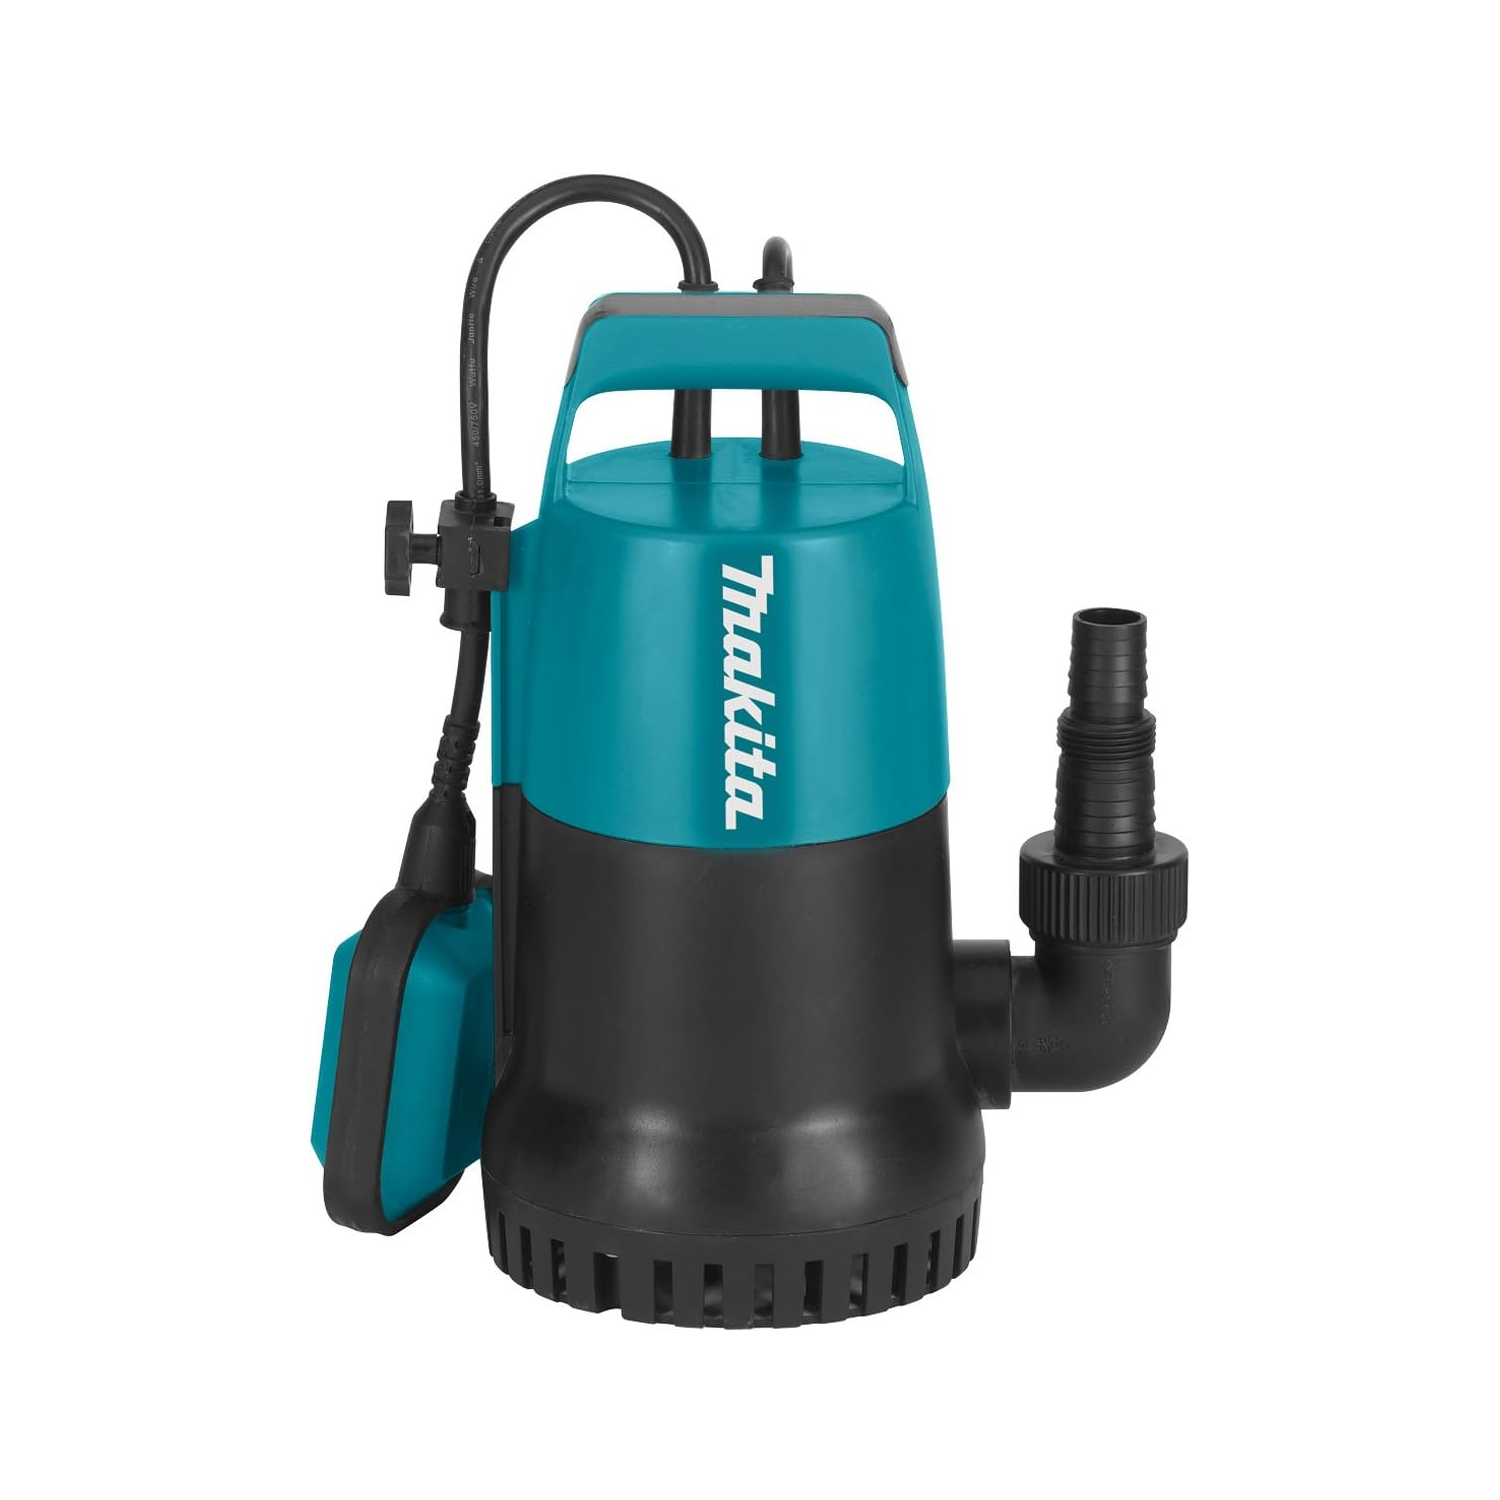 Makita pf0300/2 240v 300w submersible pump 140 litre